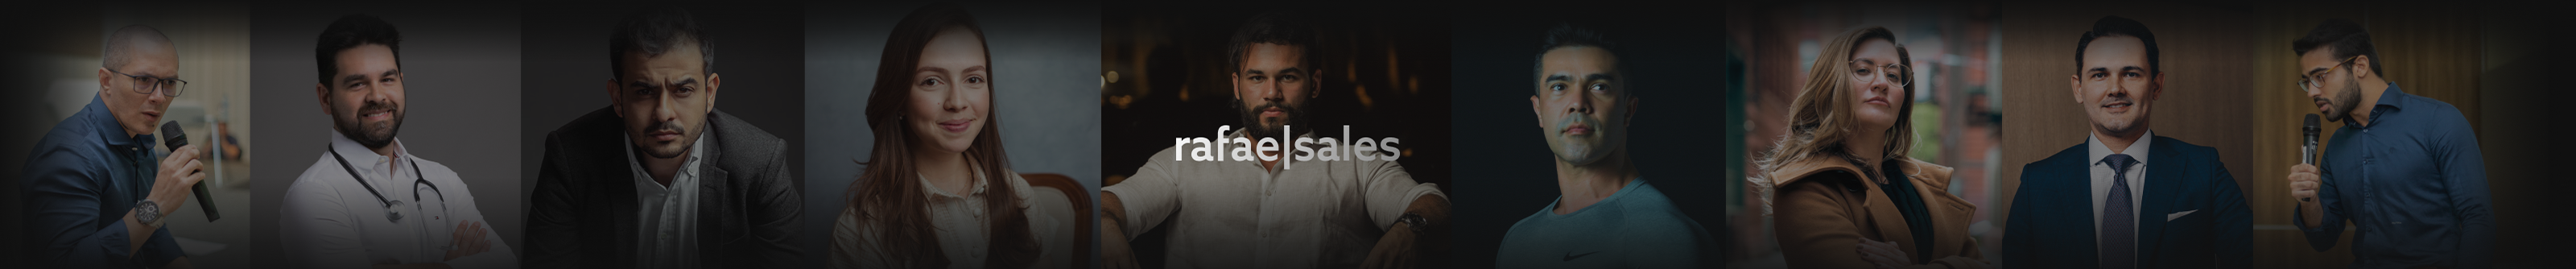 Rafael Sales's profile banner